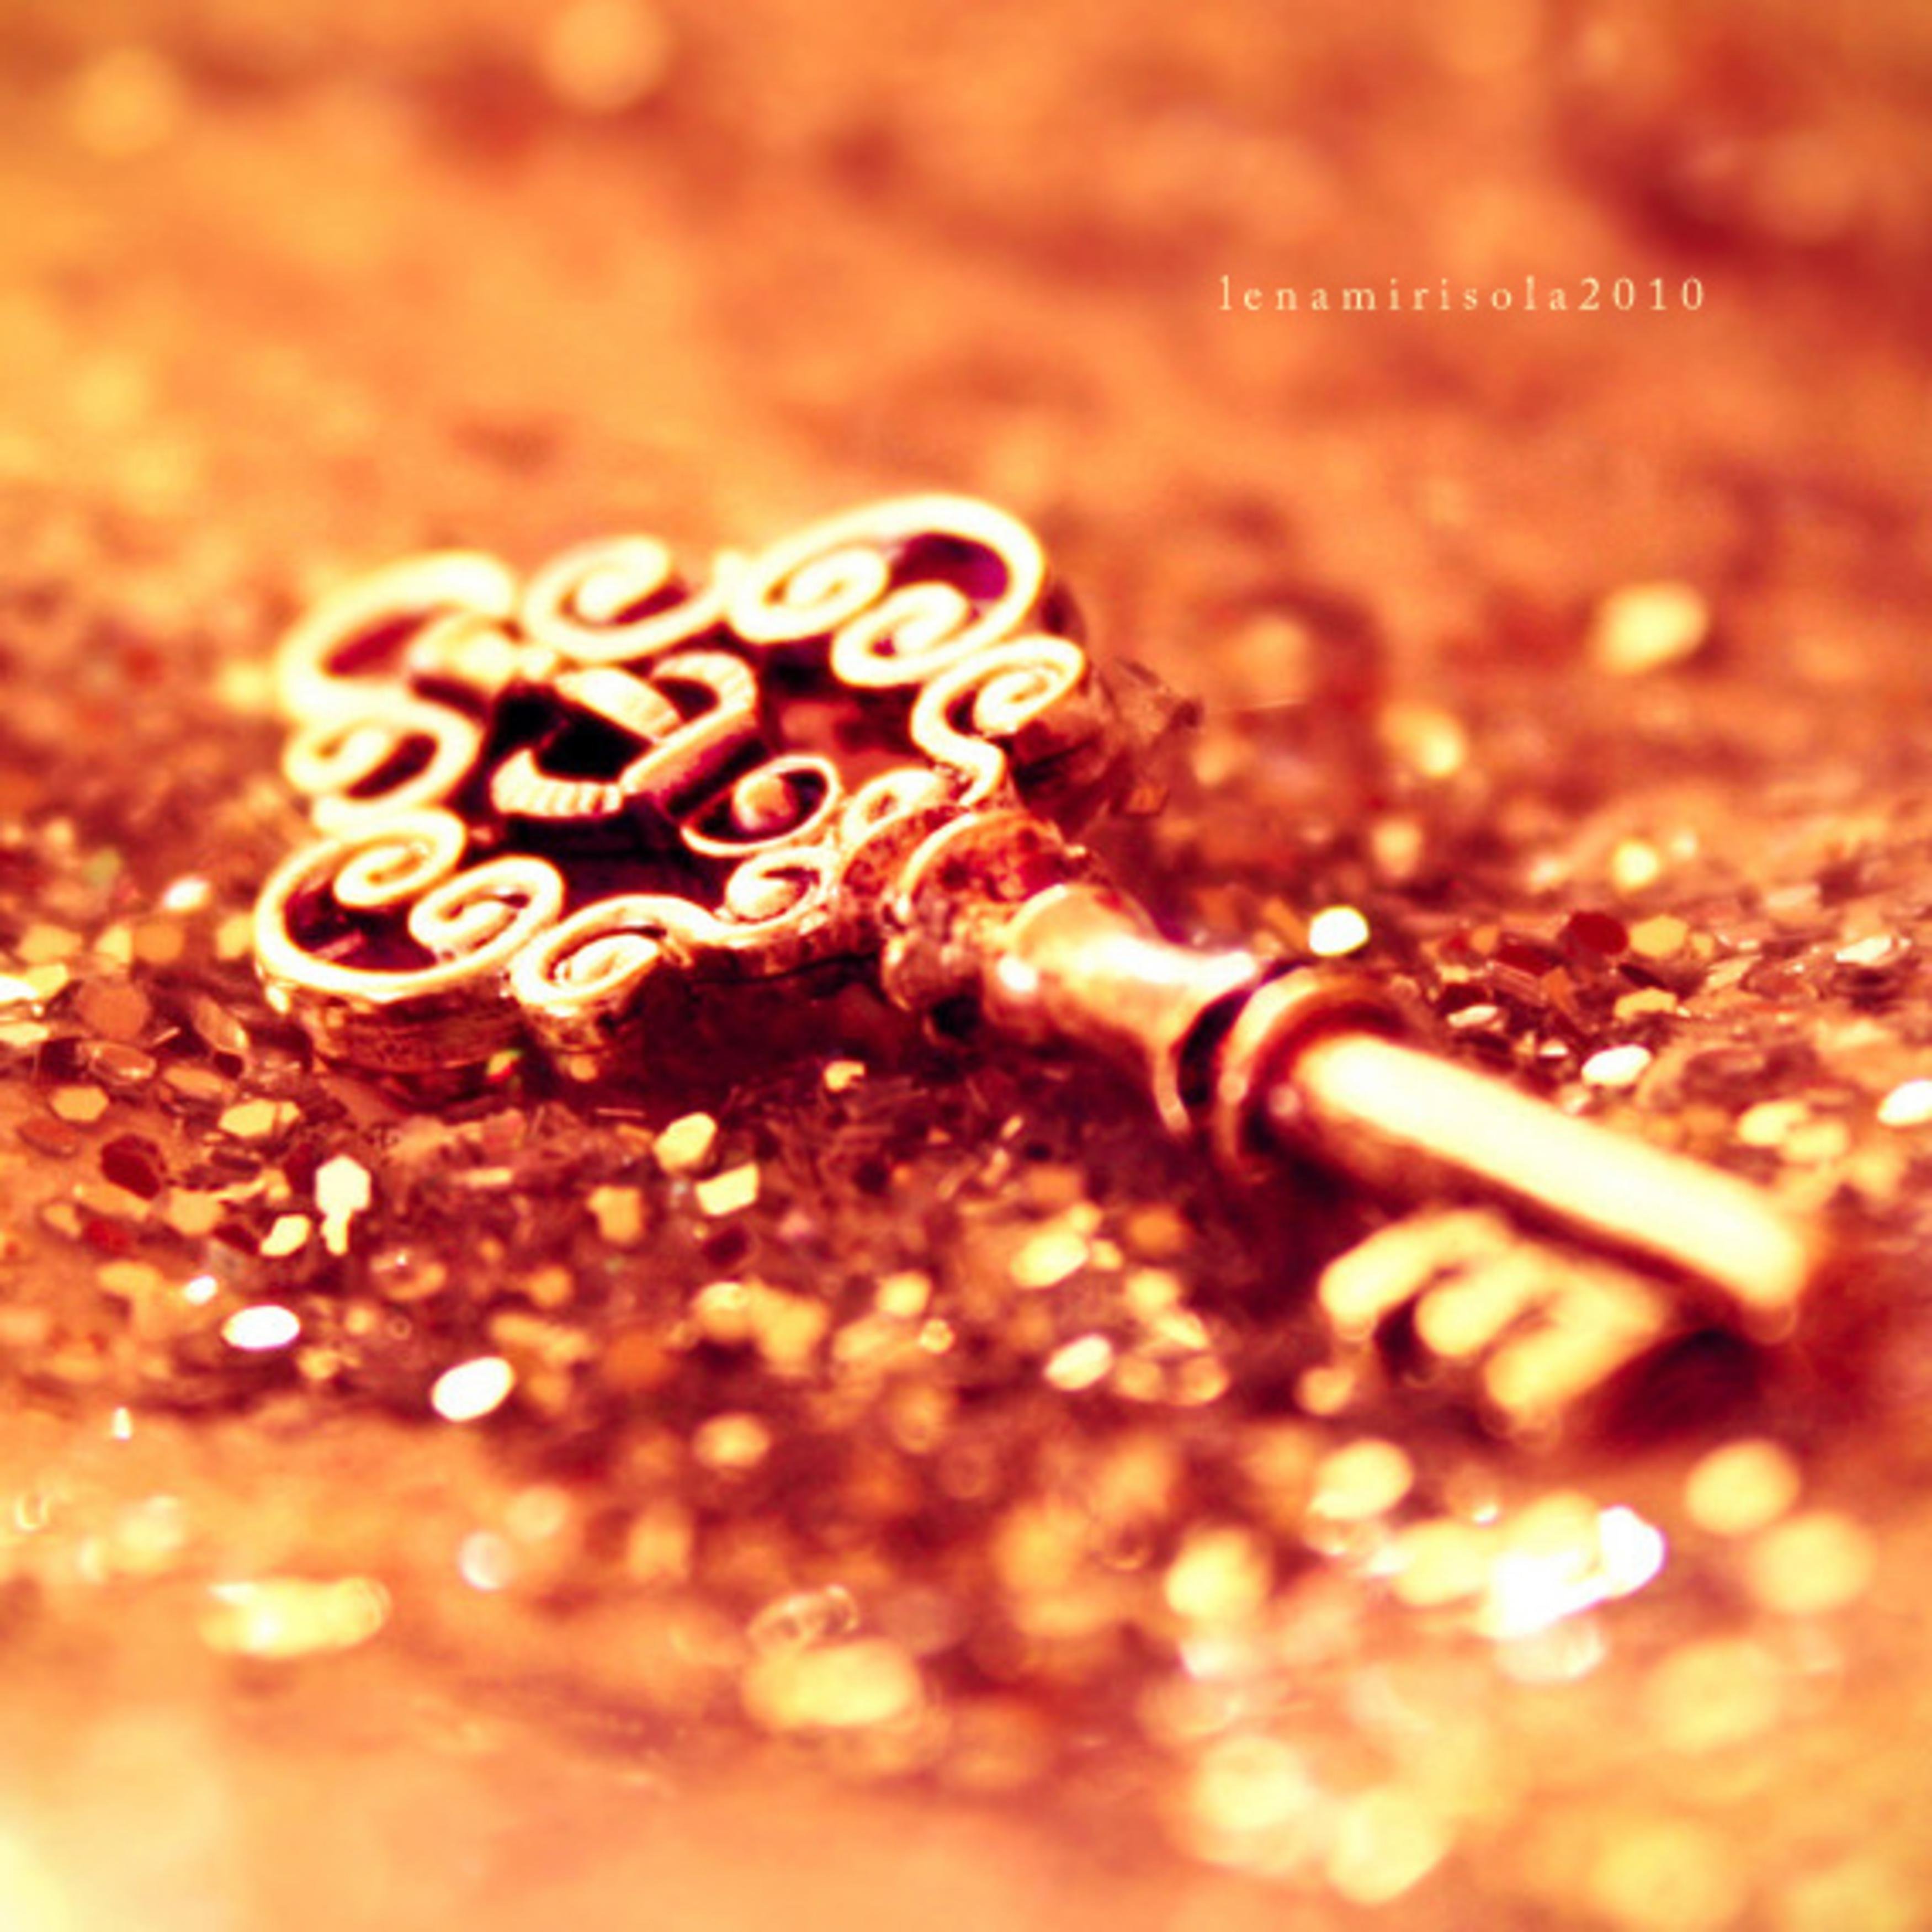 Keys picture. Красивые ключи. Красивый ключик. Старинный ключ. Золотой красивый ключ.